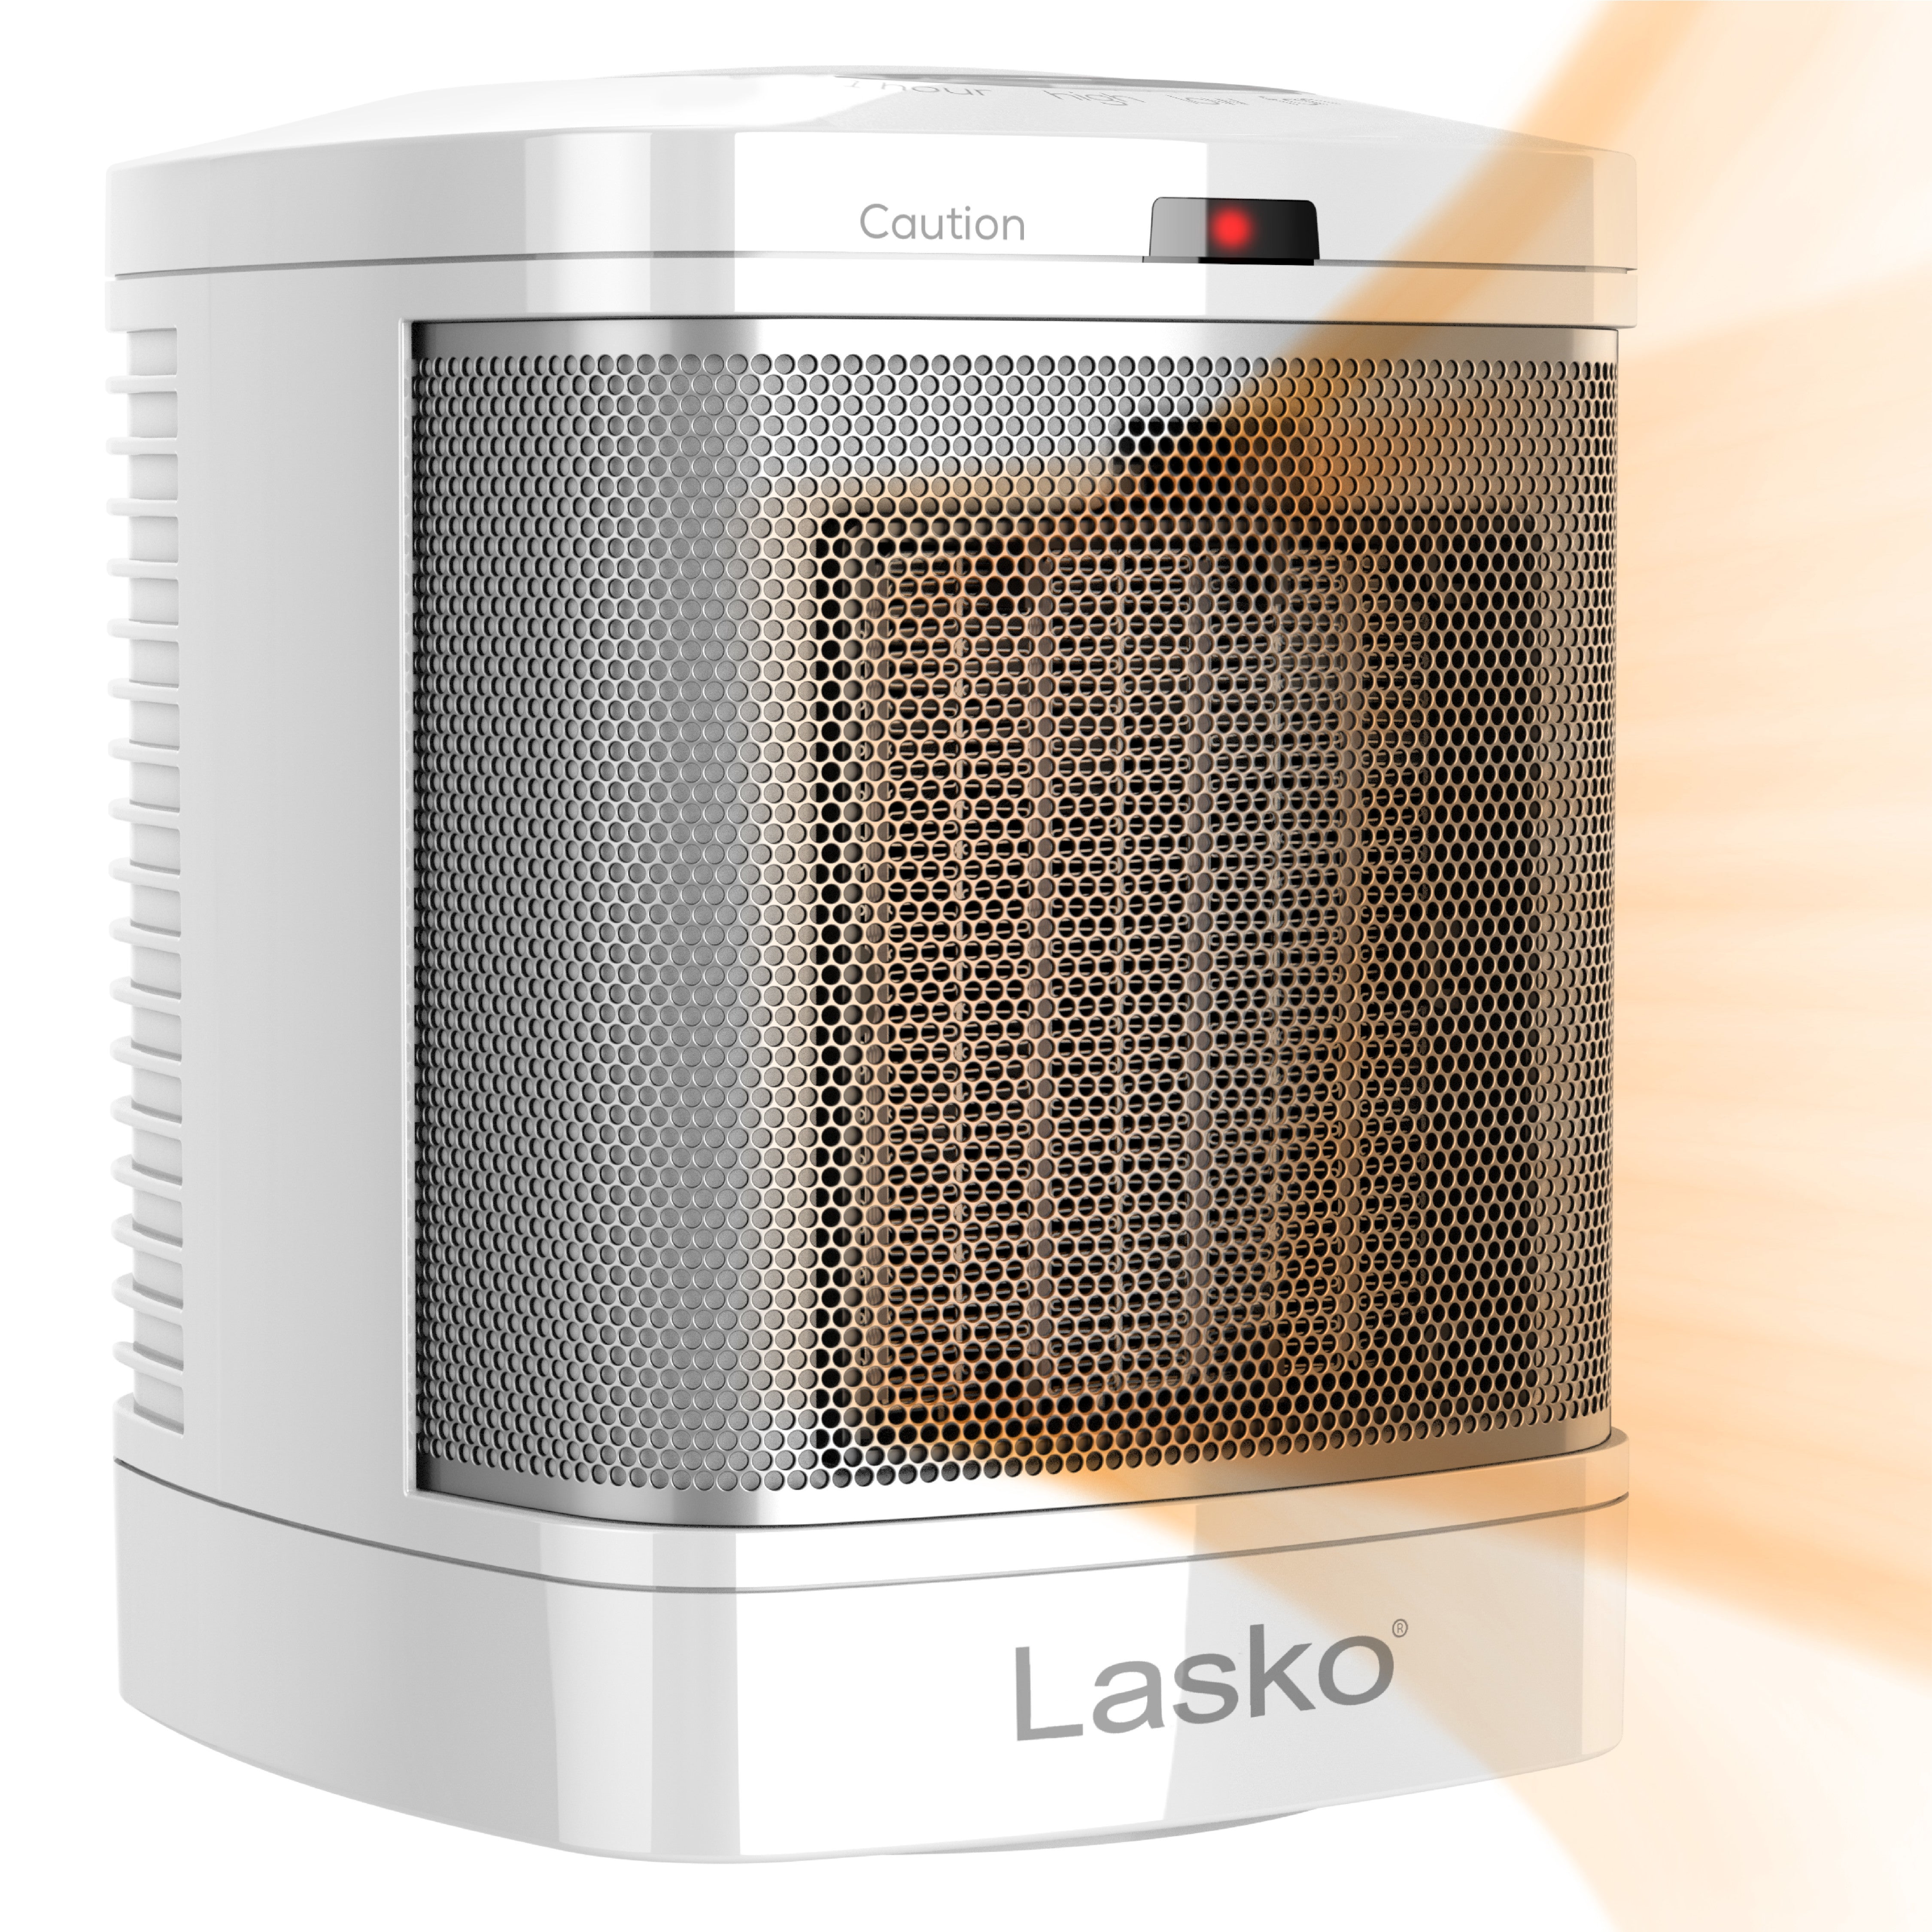 Lasko 1500W Ceramic Bathroom Space Heater with ALCI Safety Plug, CD08210, White